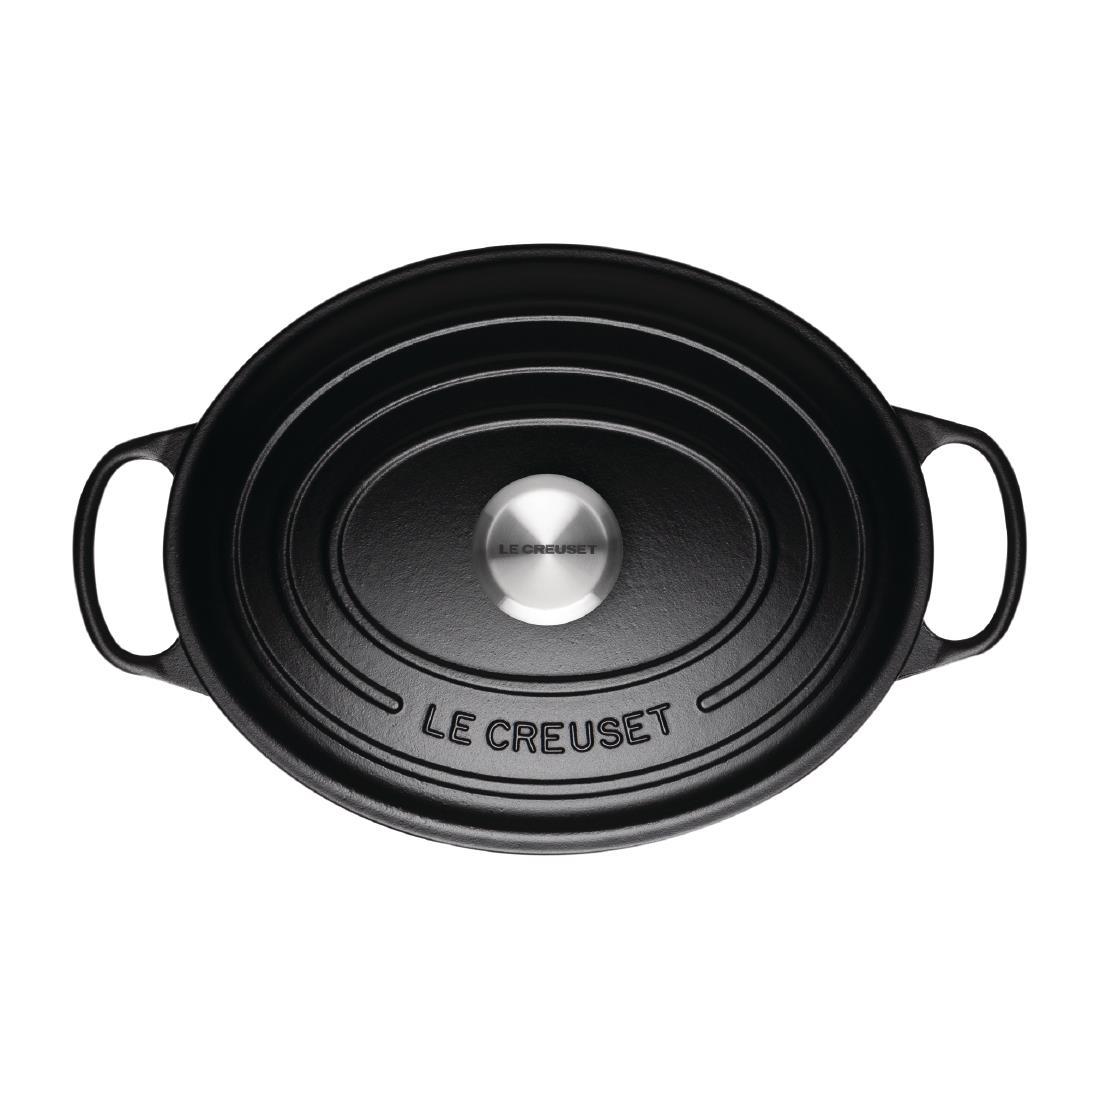 Le Creuset Cast Iron Oval Casserole 4.1L Satin Black - DR466  - 2